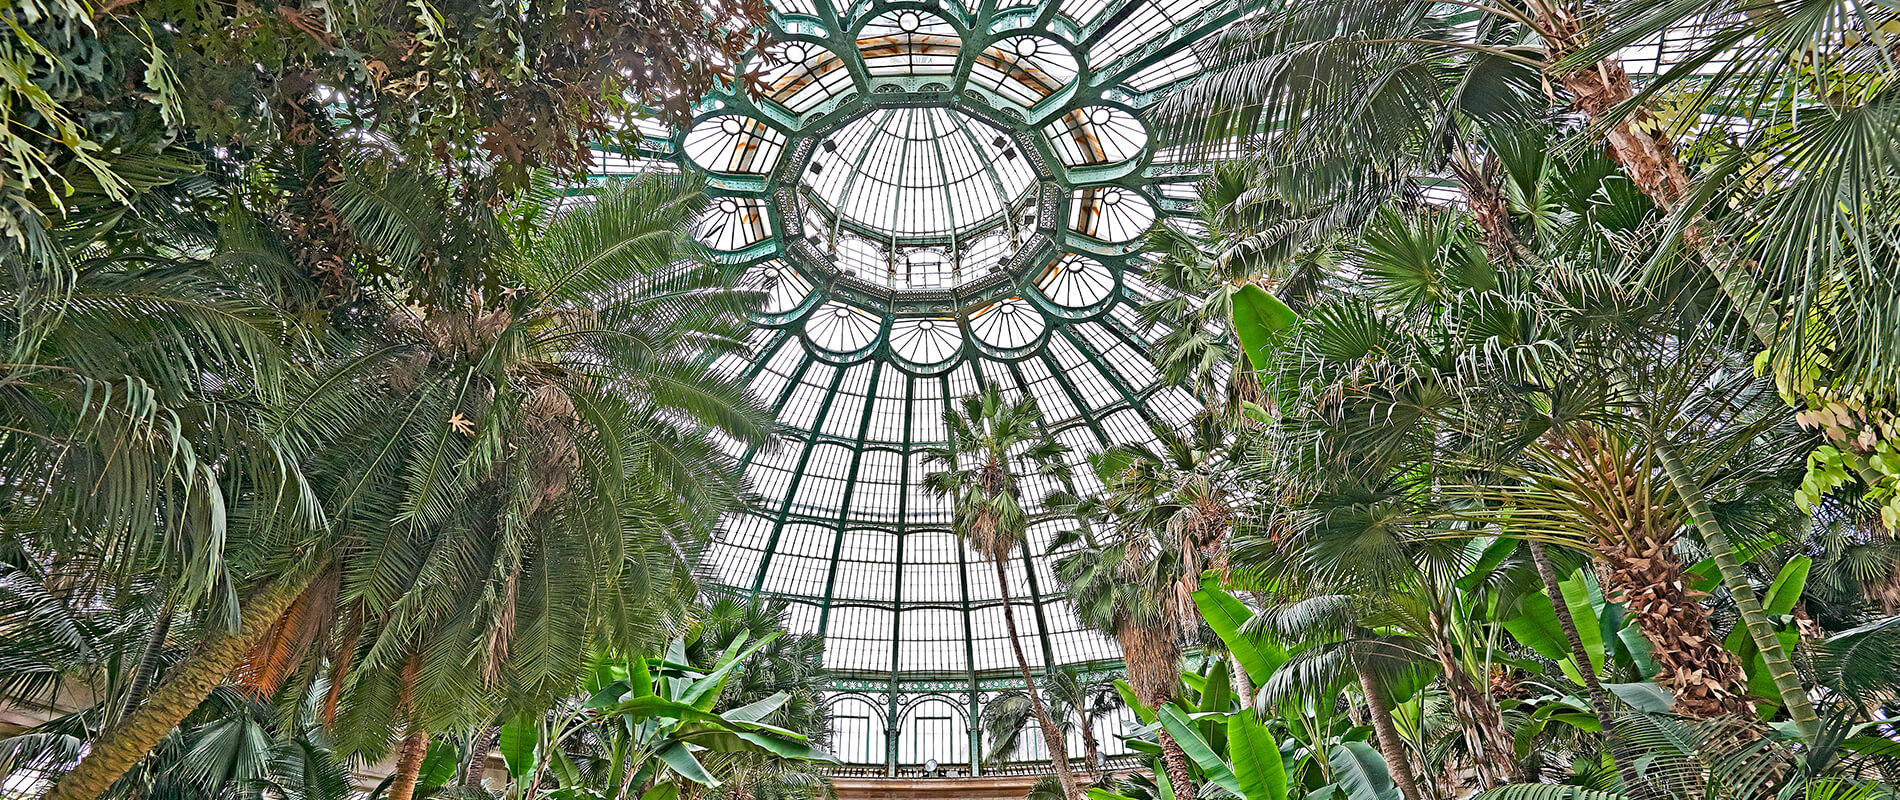 The Royal Greenhouses of Laeken, the wonder gardens of Brussels